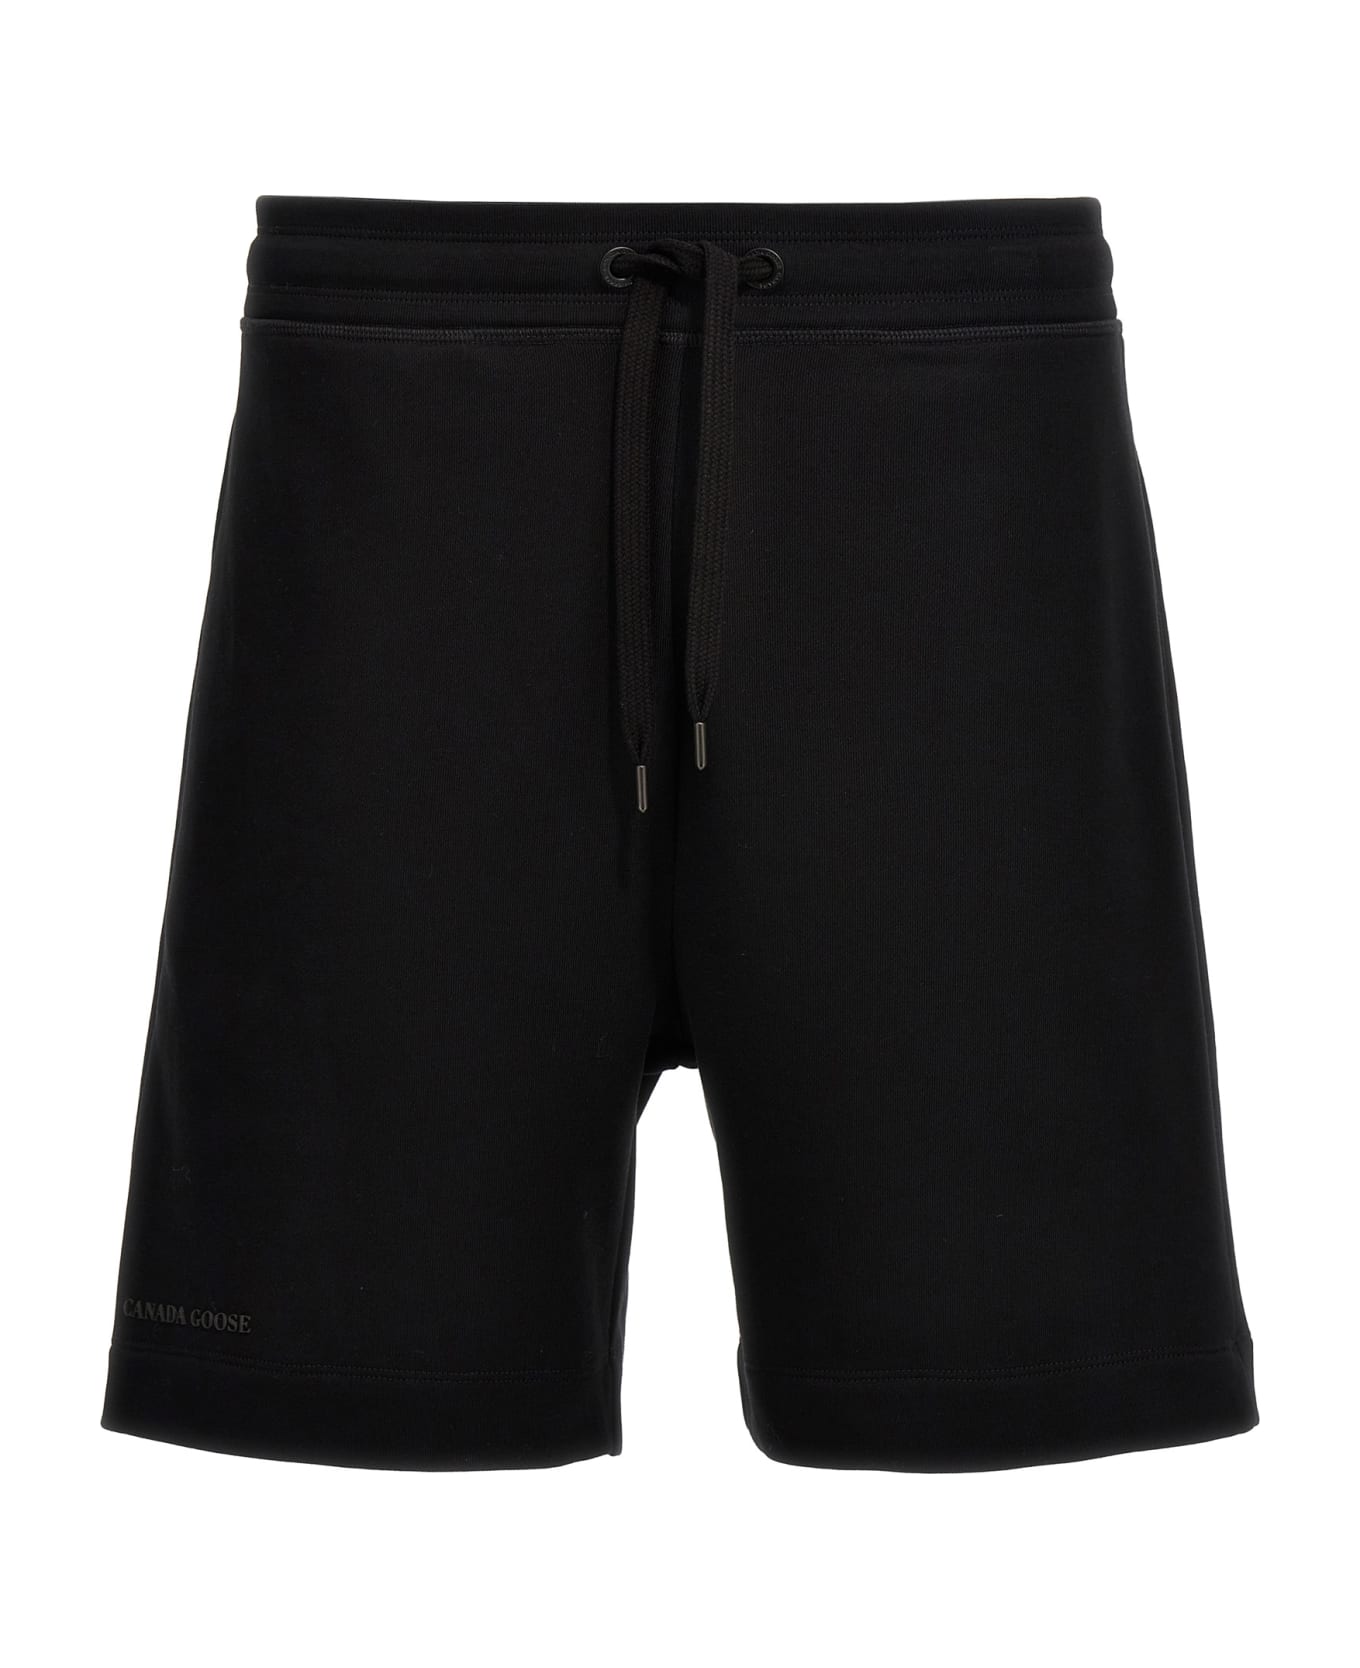 Canada Goose 'huron' Bermuda Shorts - Black ショートパンツ